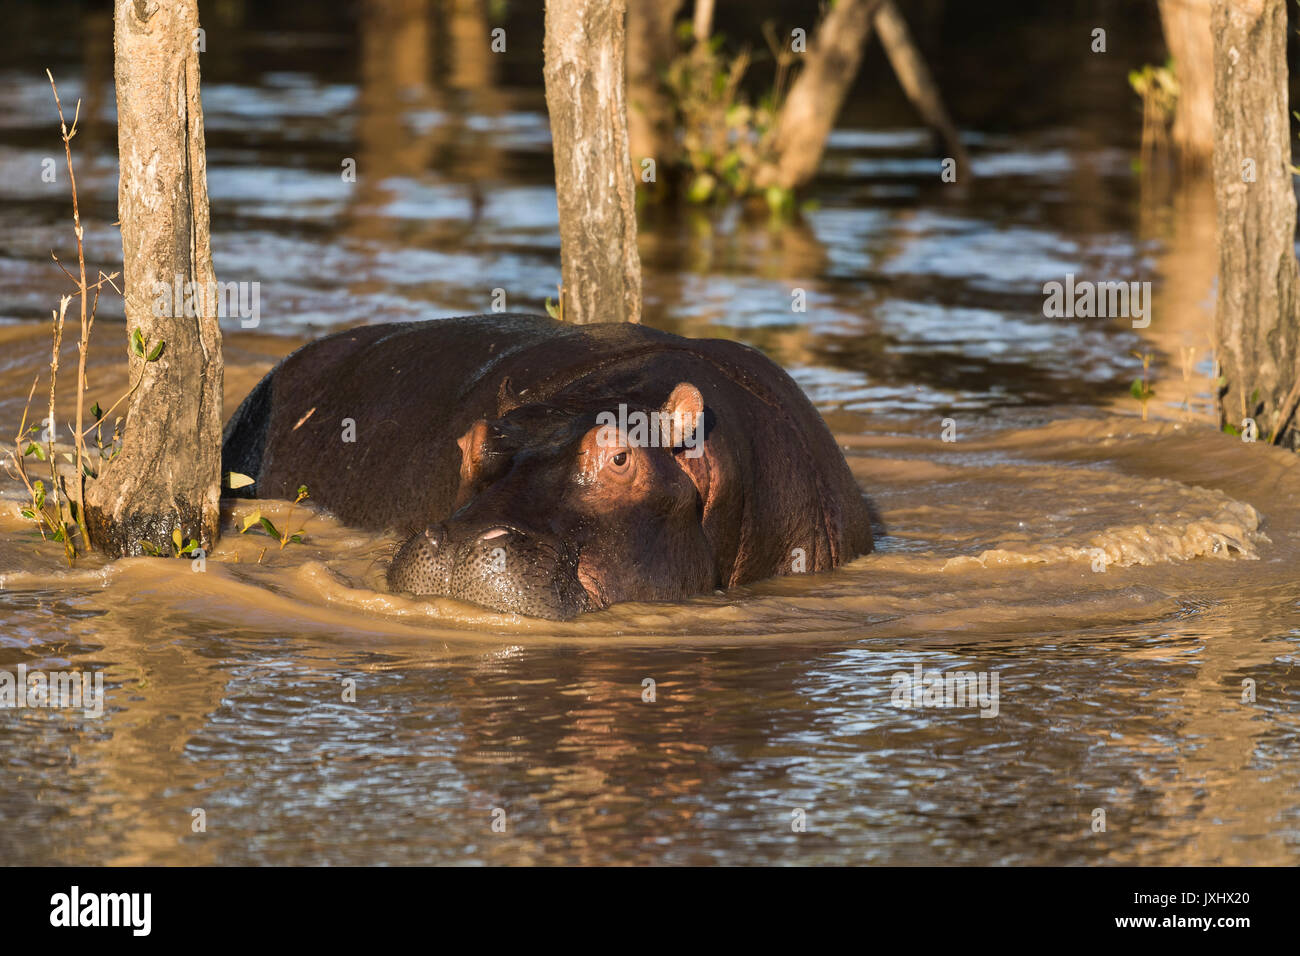 Gemeinsame hippopotamus amphibius (Hippopotamuspotamus) in Wasser in den Mangrovenwald, iSimangaliso Wetland Park, KwaZulu-Natal Stockfoto